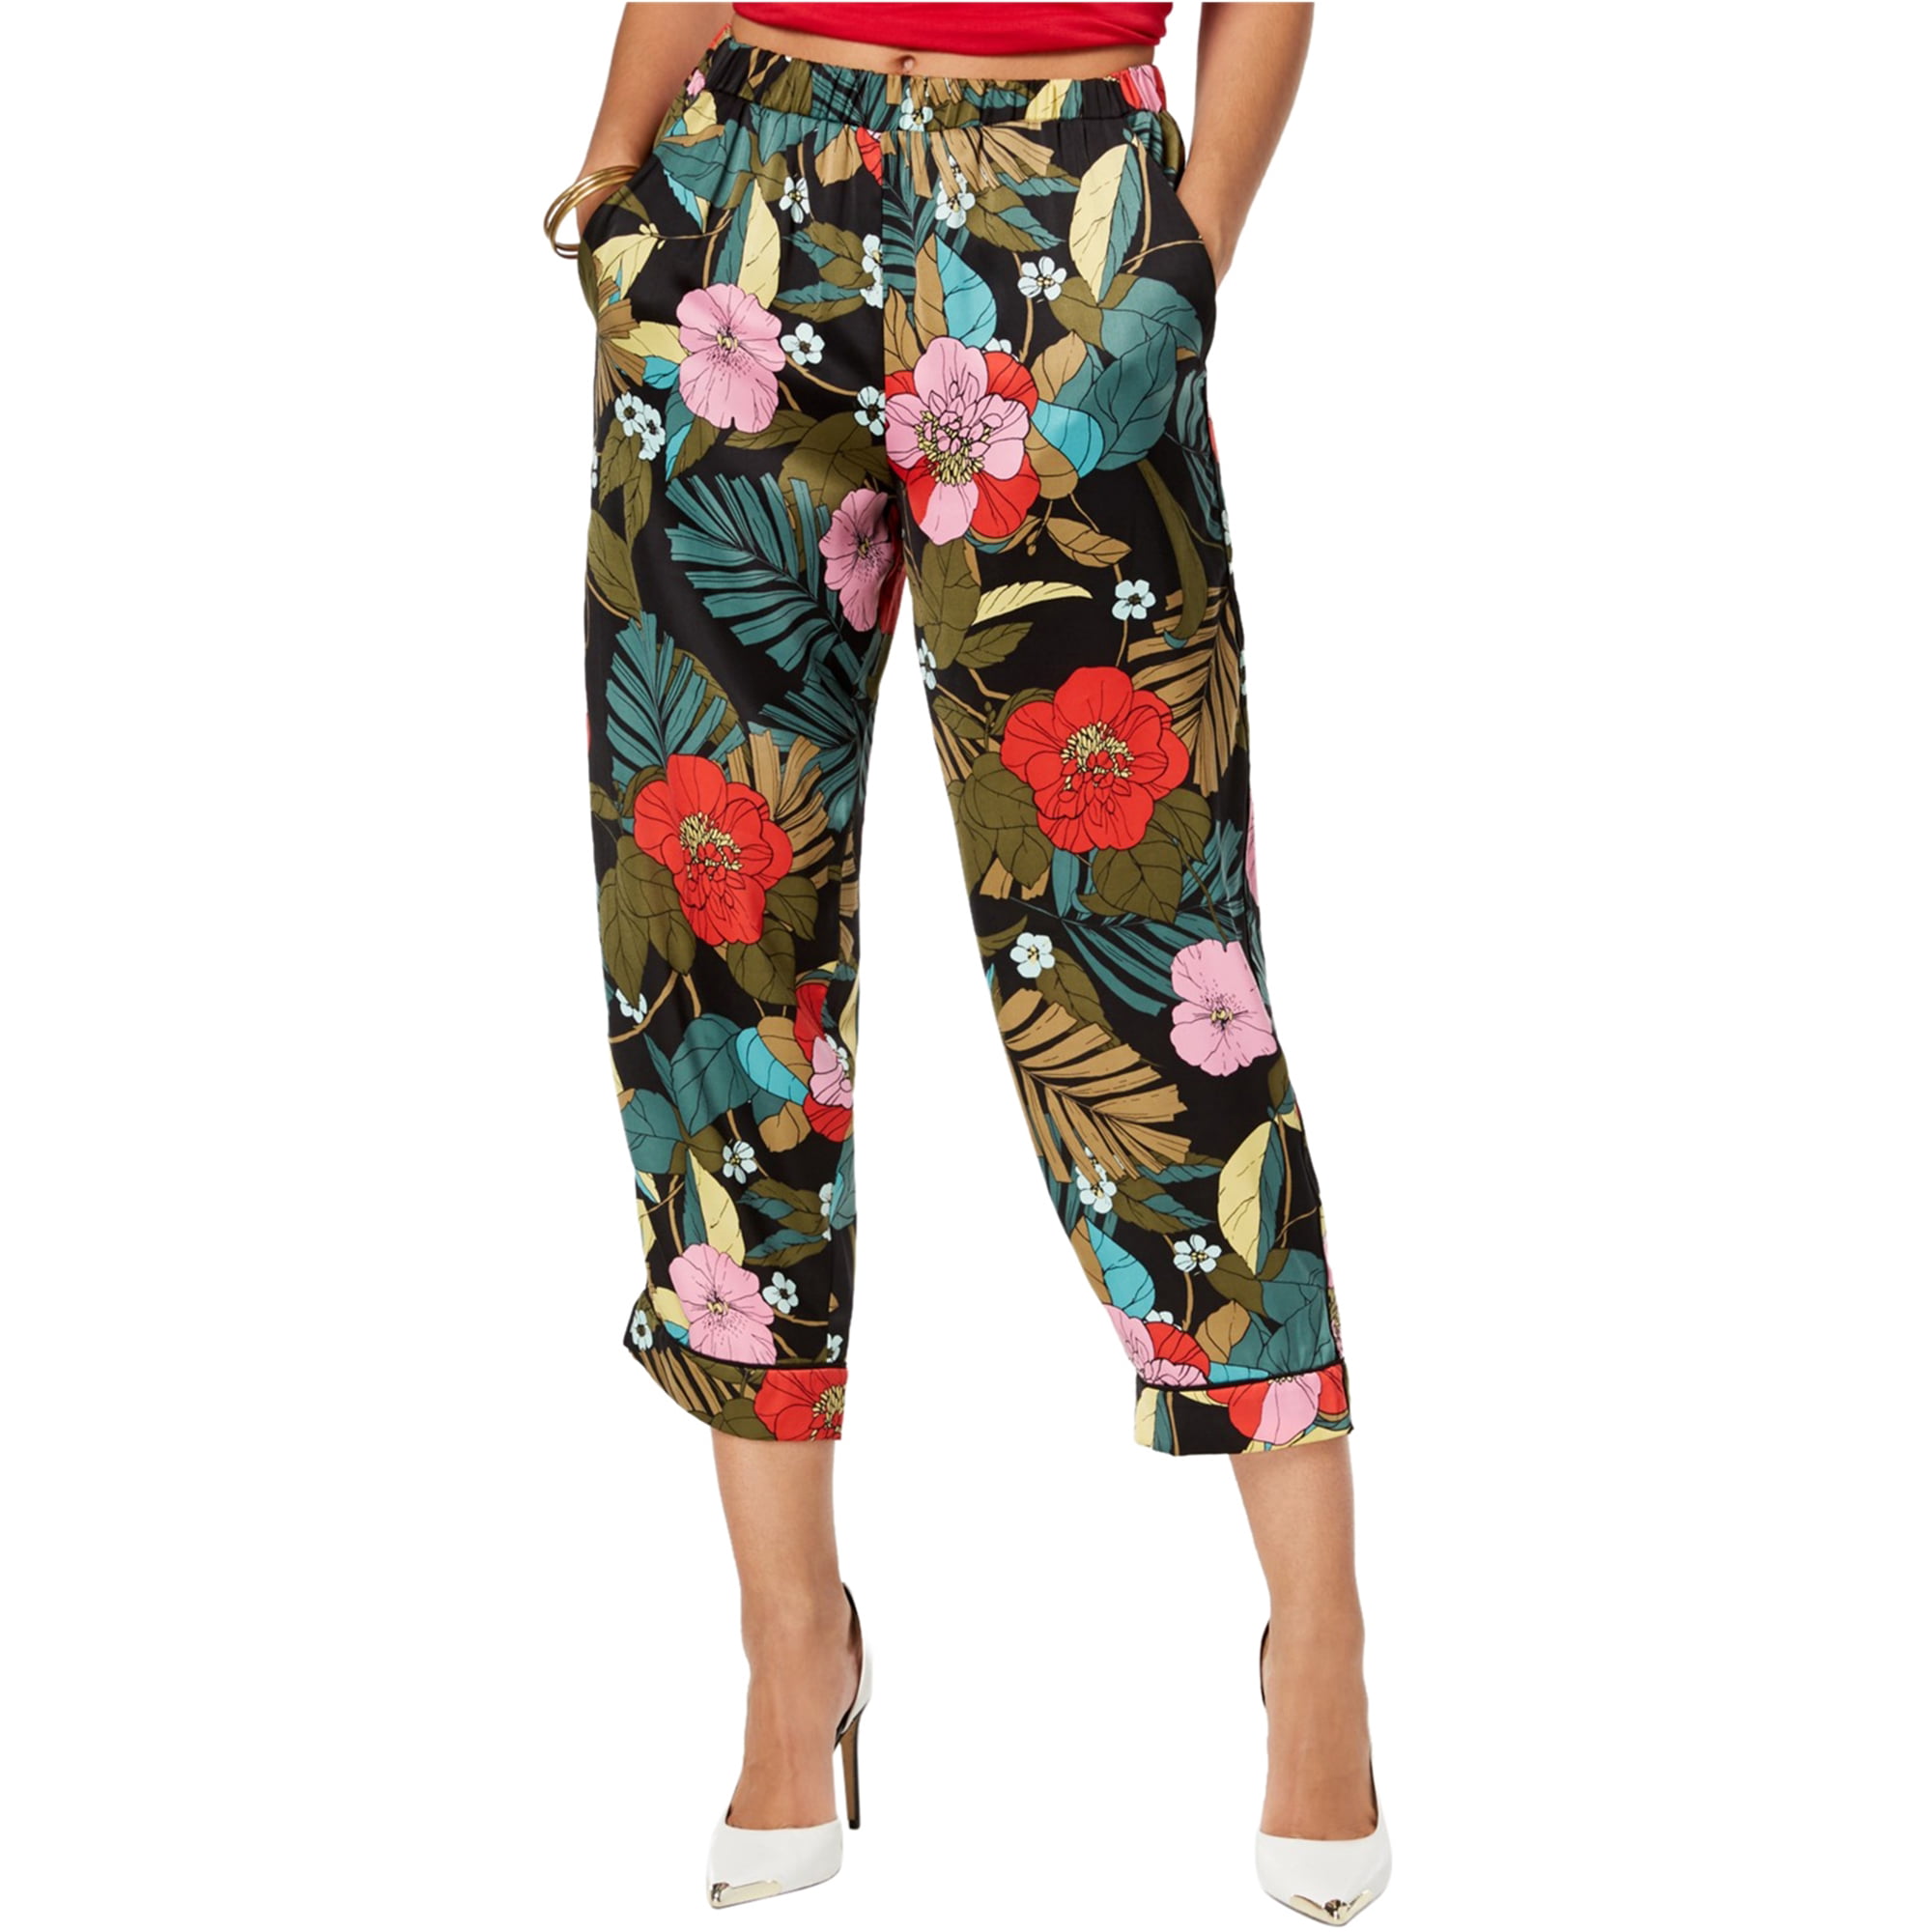 GUESS - GUESS Womens Printed Casual Jogger Pants junglepalm XL/27 ...